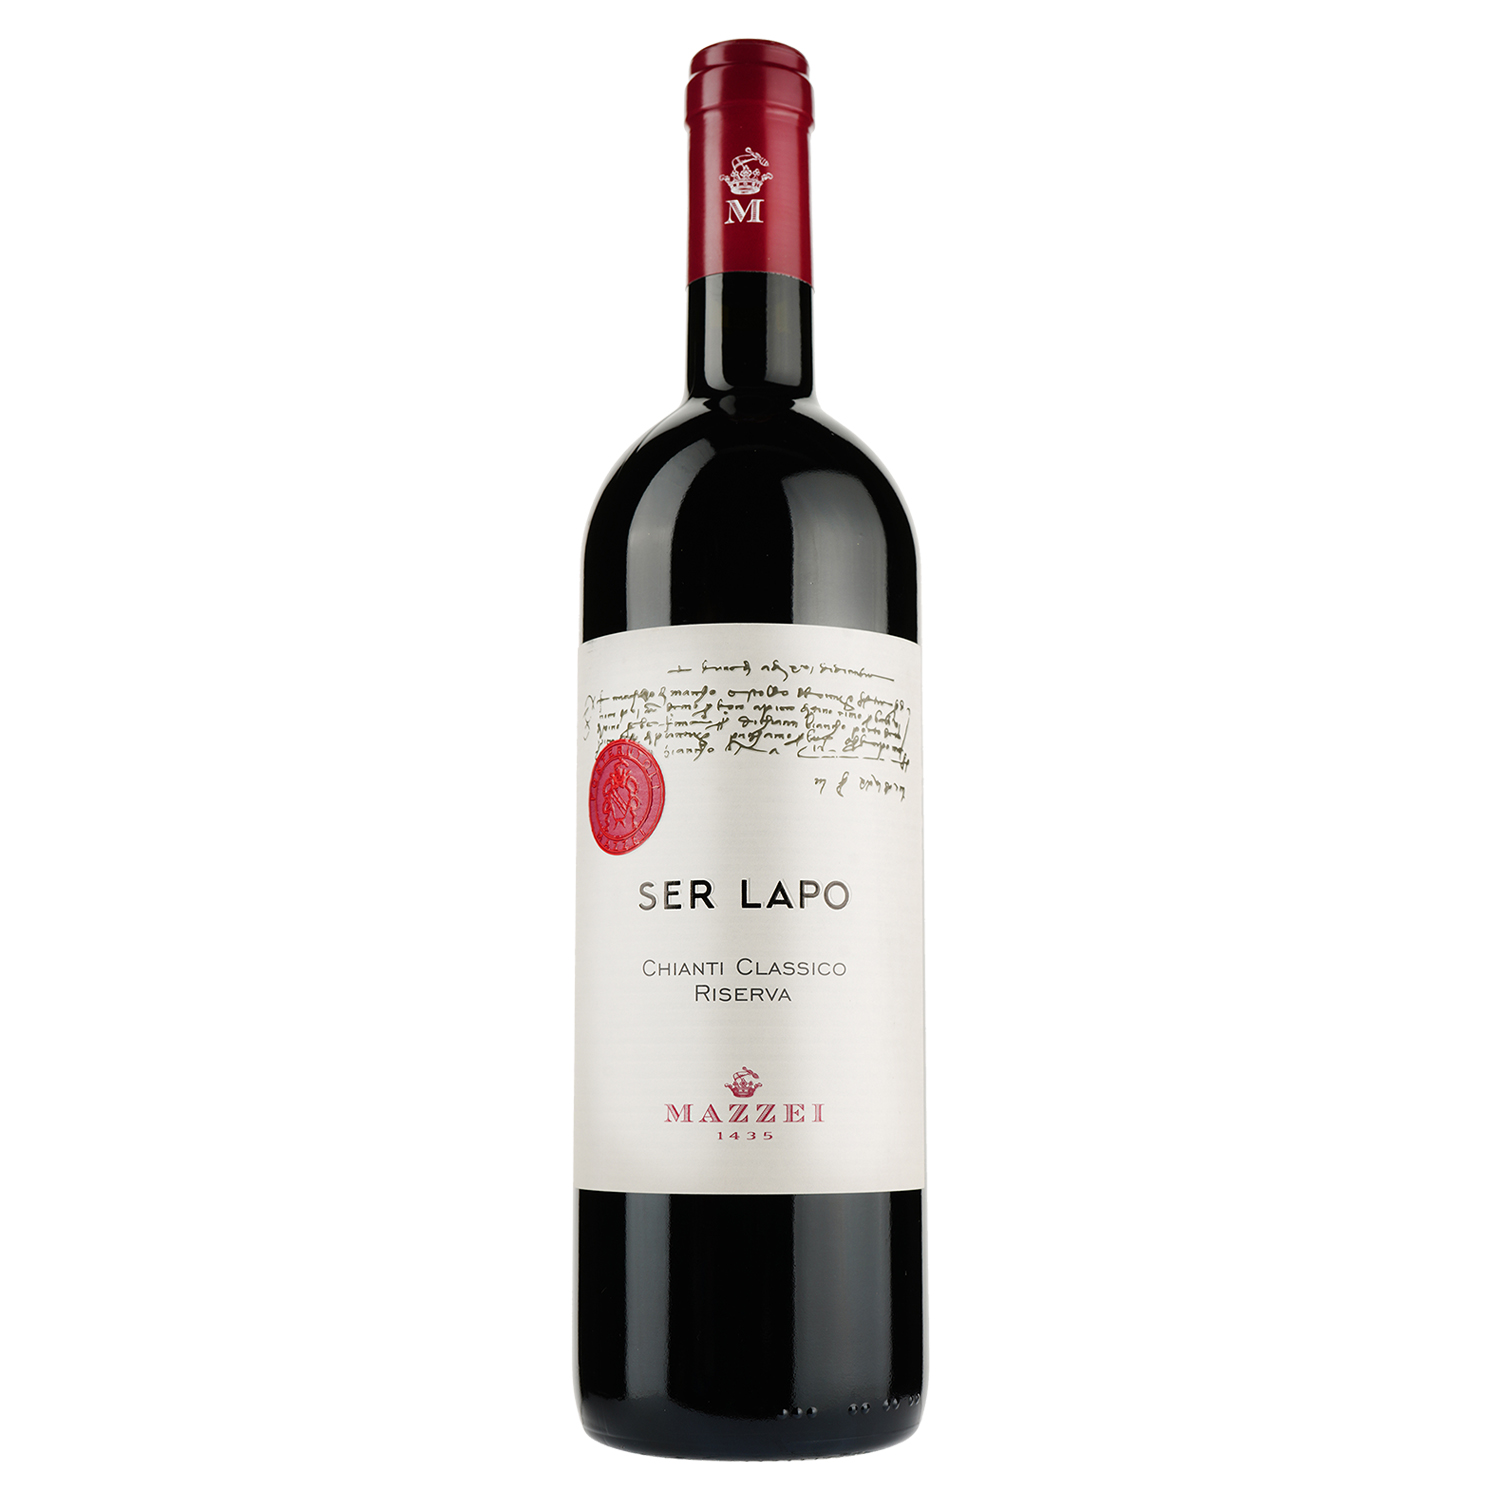 Вино Marchesi Mazzei S.p.A. Ser Lapo – Chianti Classico Riserva DOCG, красное, сухое, 0,75 л - фото 1